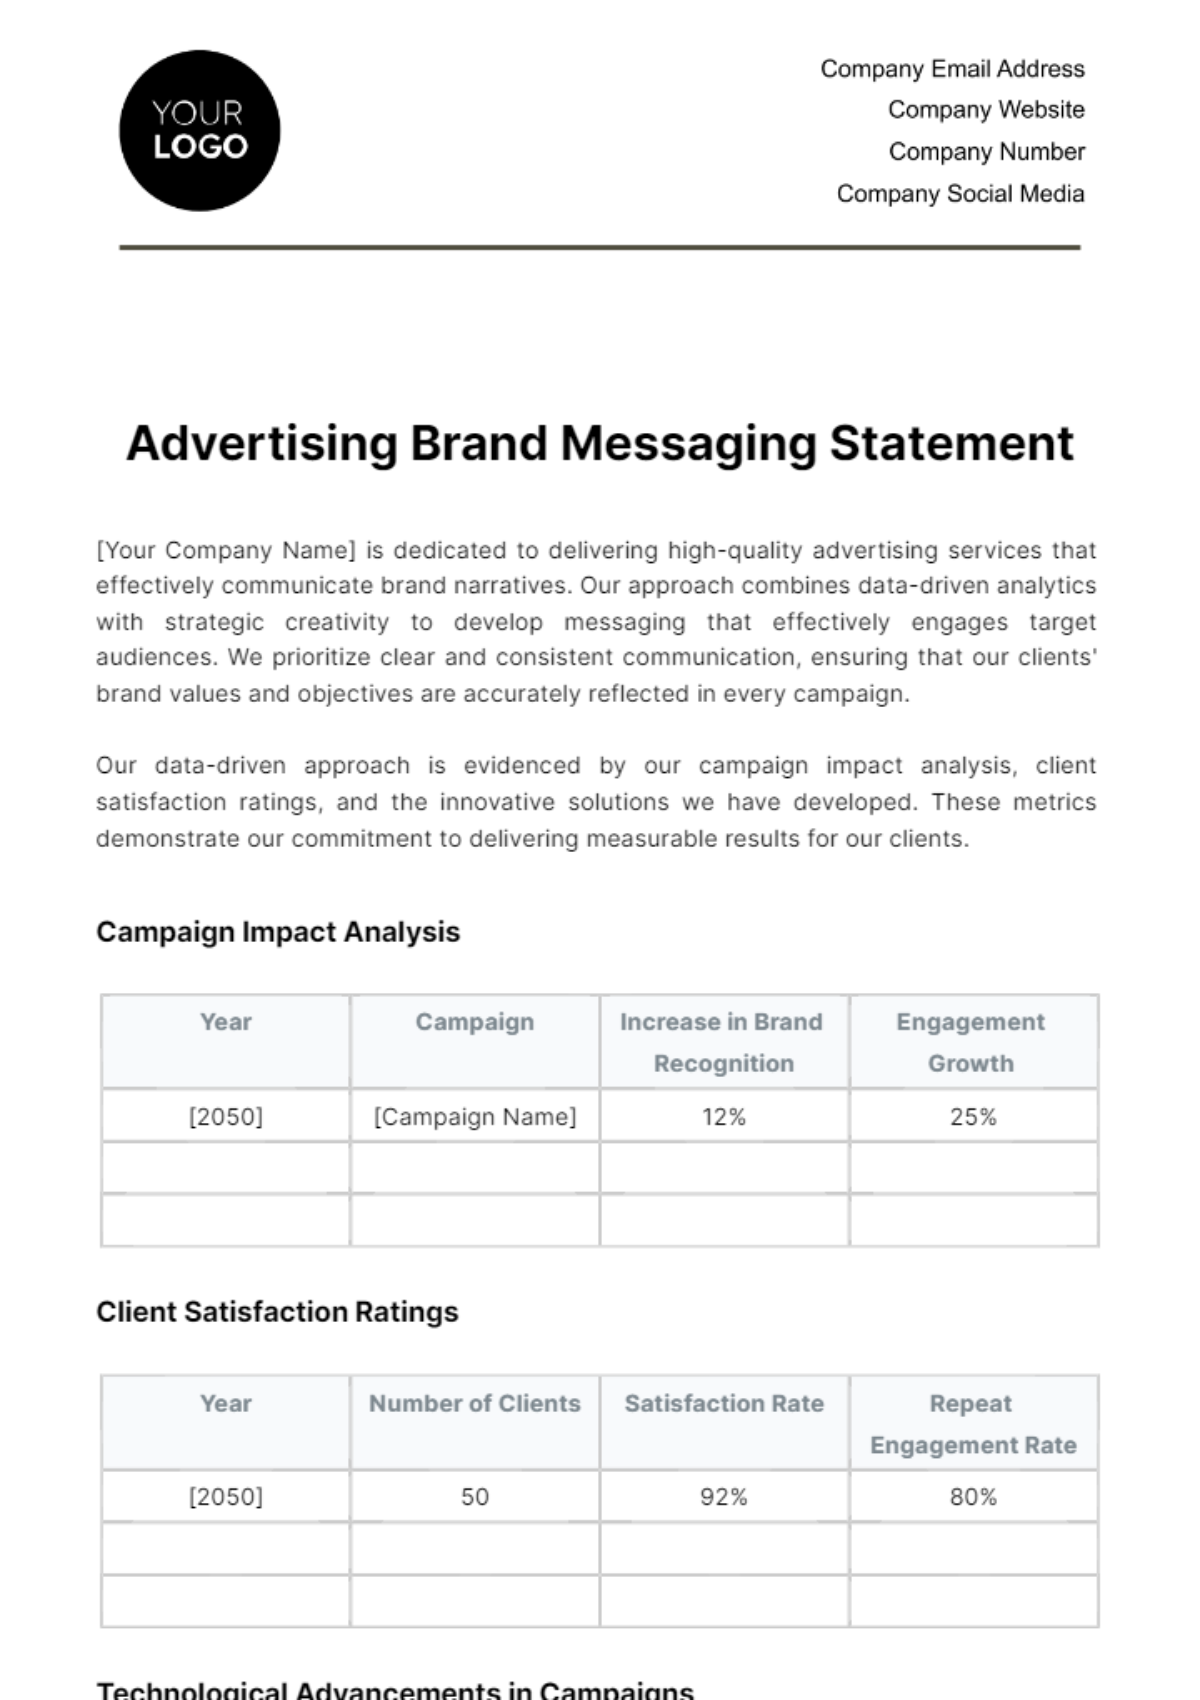 Advertising Brand Messaging Statement Template